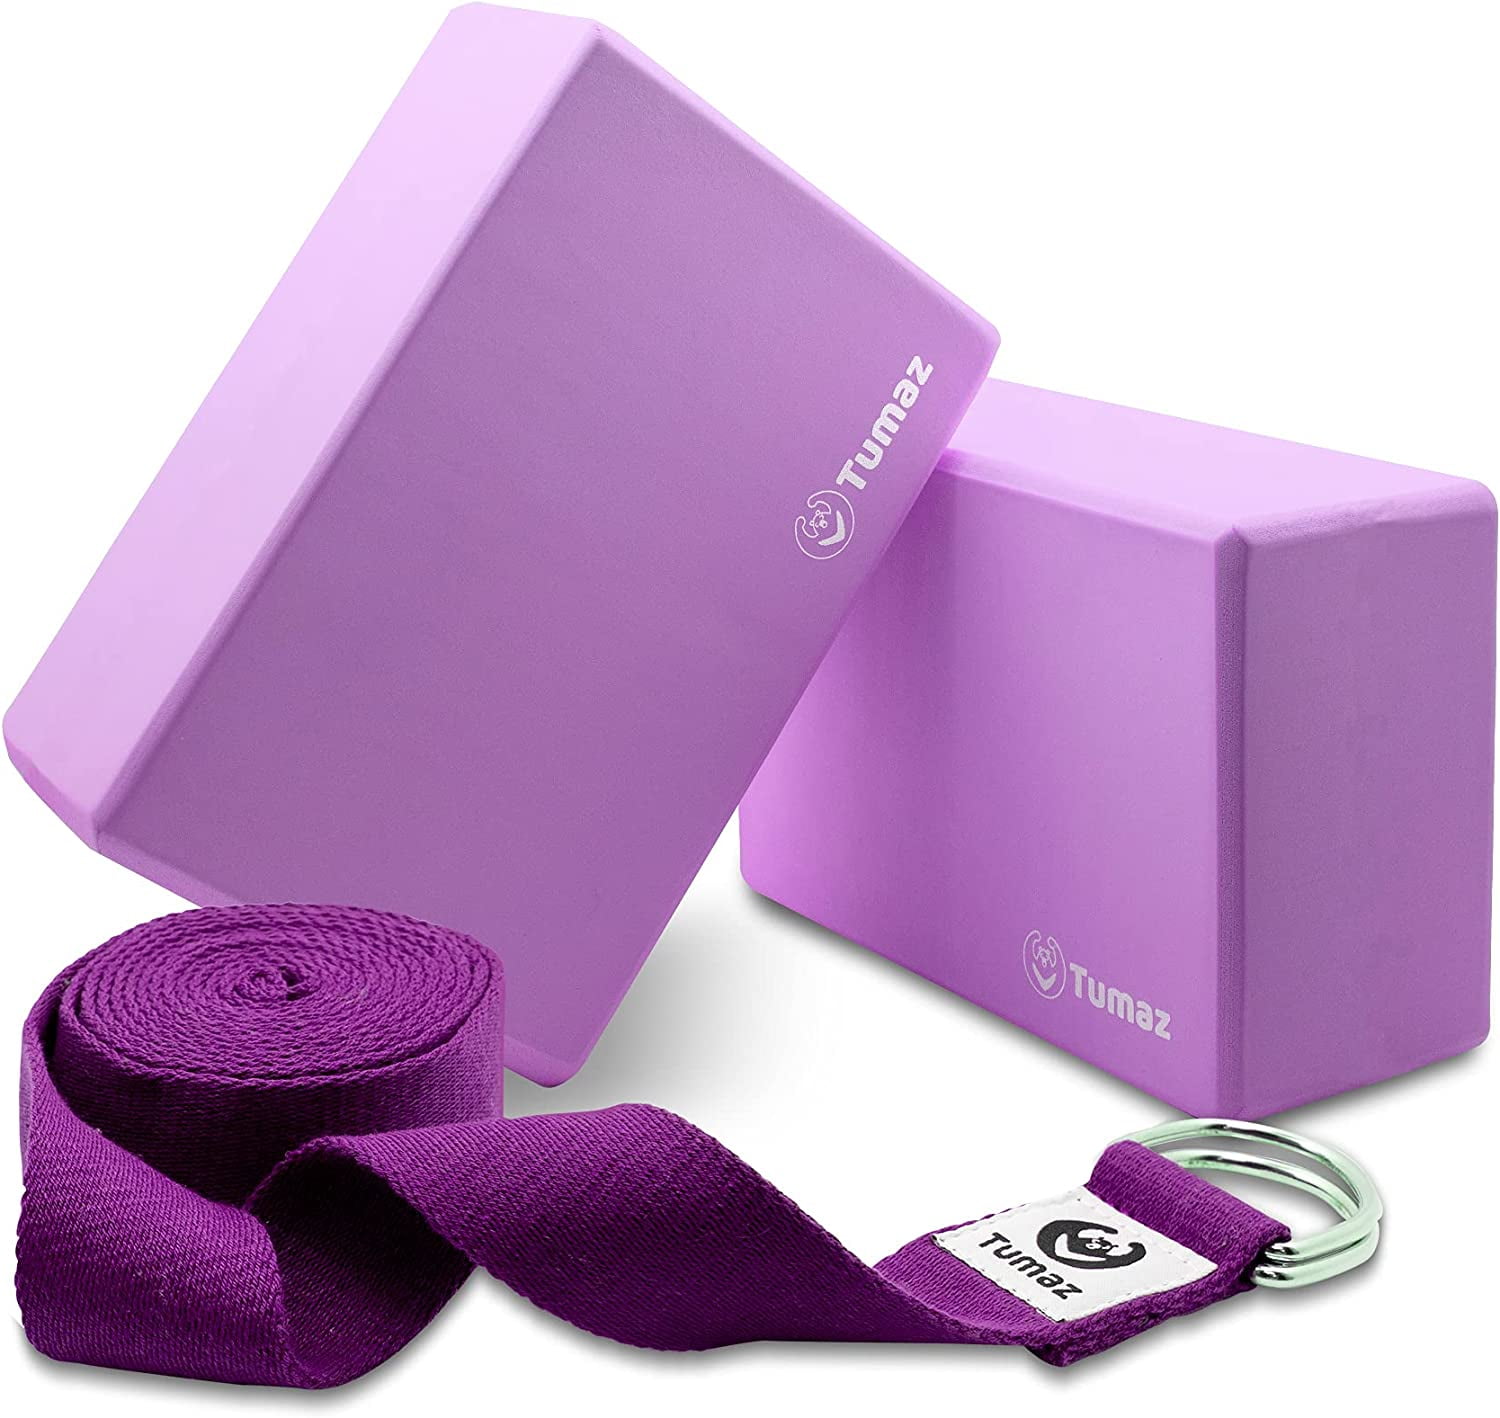 Tumaz Yoga Blocks 2 Pack with Strap, Lightweight Foam Yoga Blocks